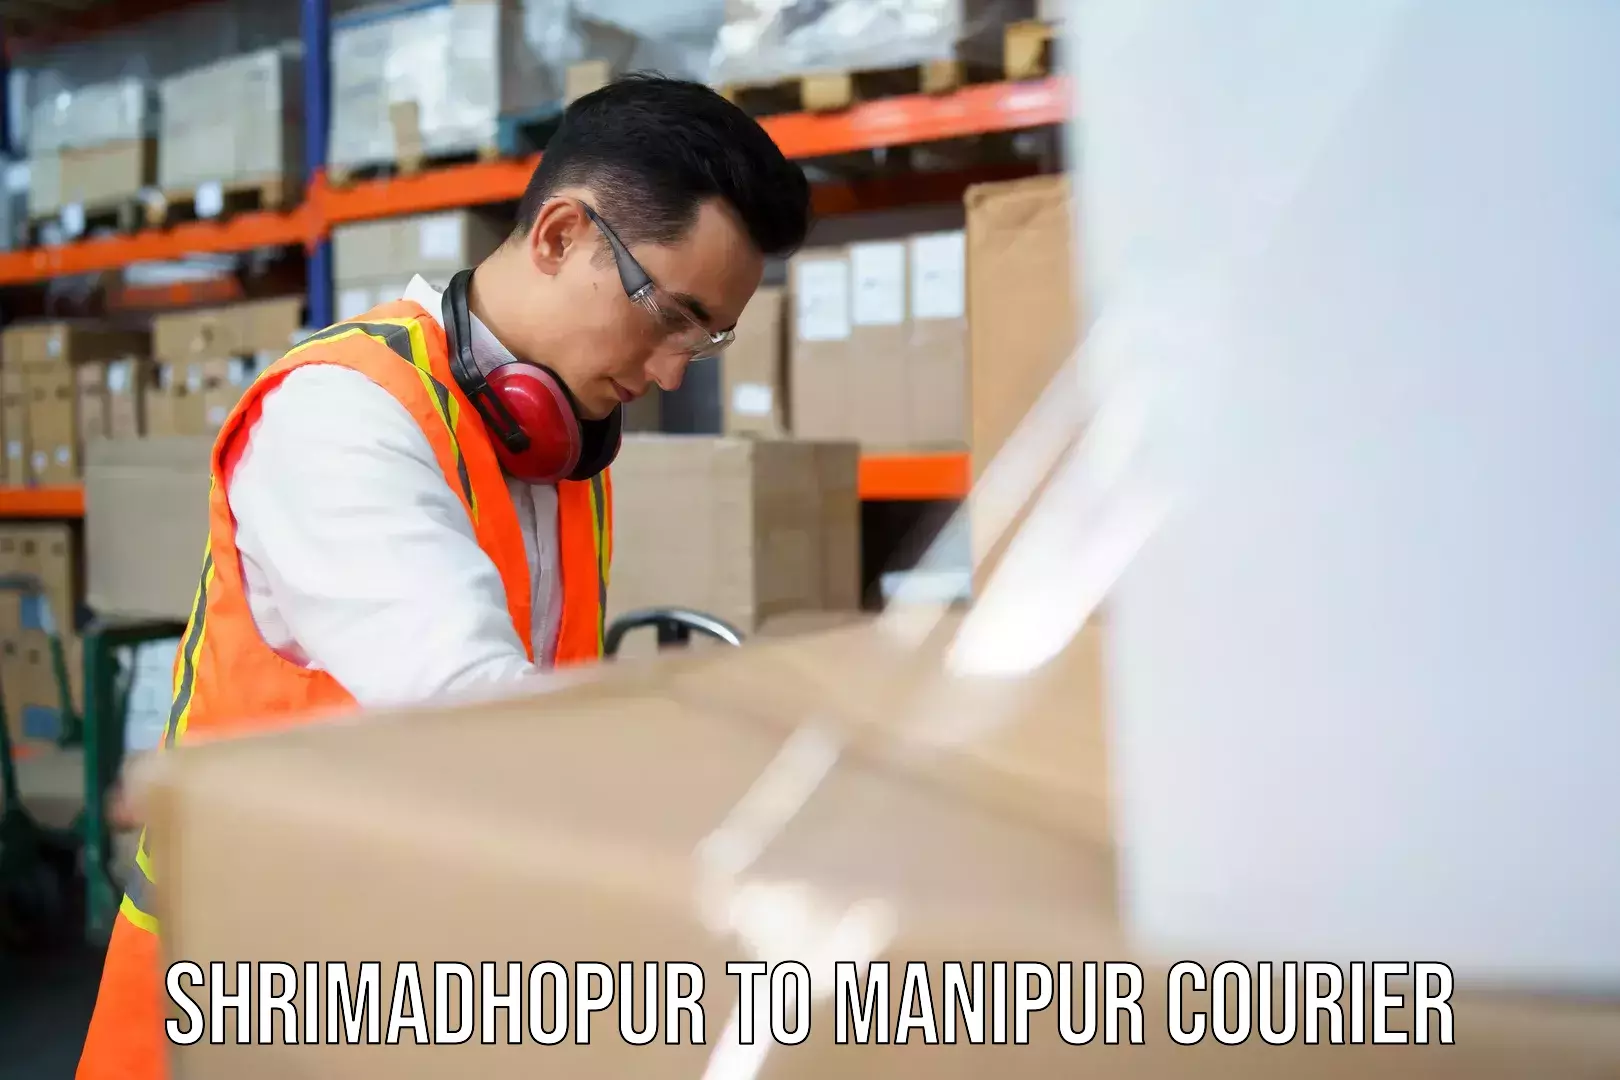 Digital courier platforms Shrimadhopur to Manipur